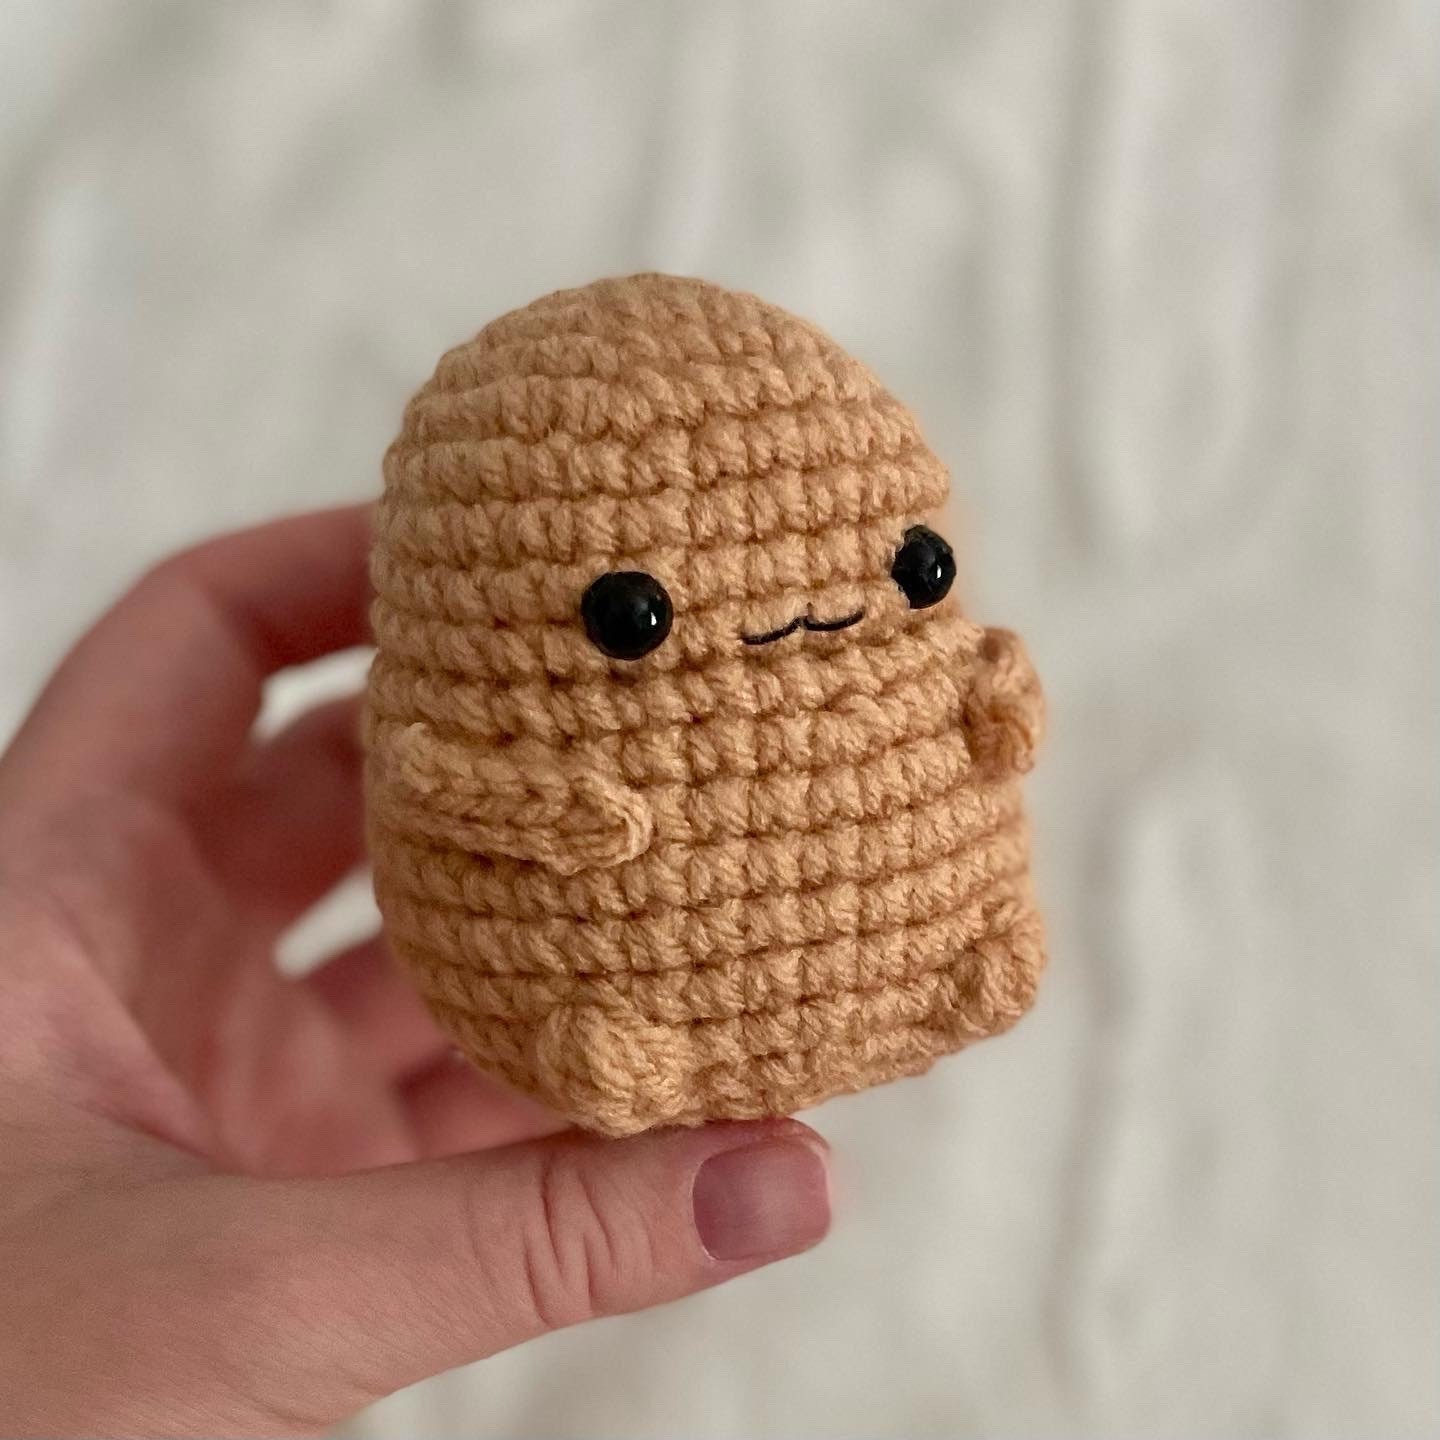 Easy Crochet Positive Potato Amigurumi